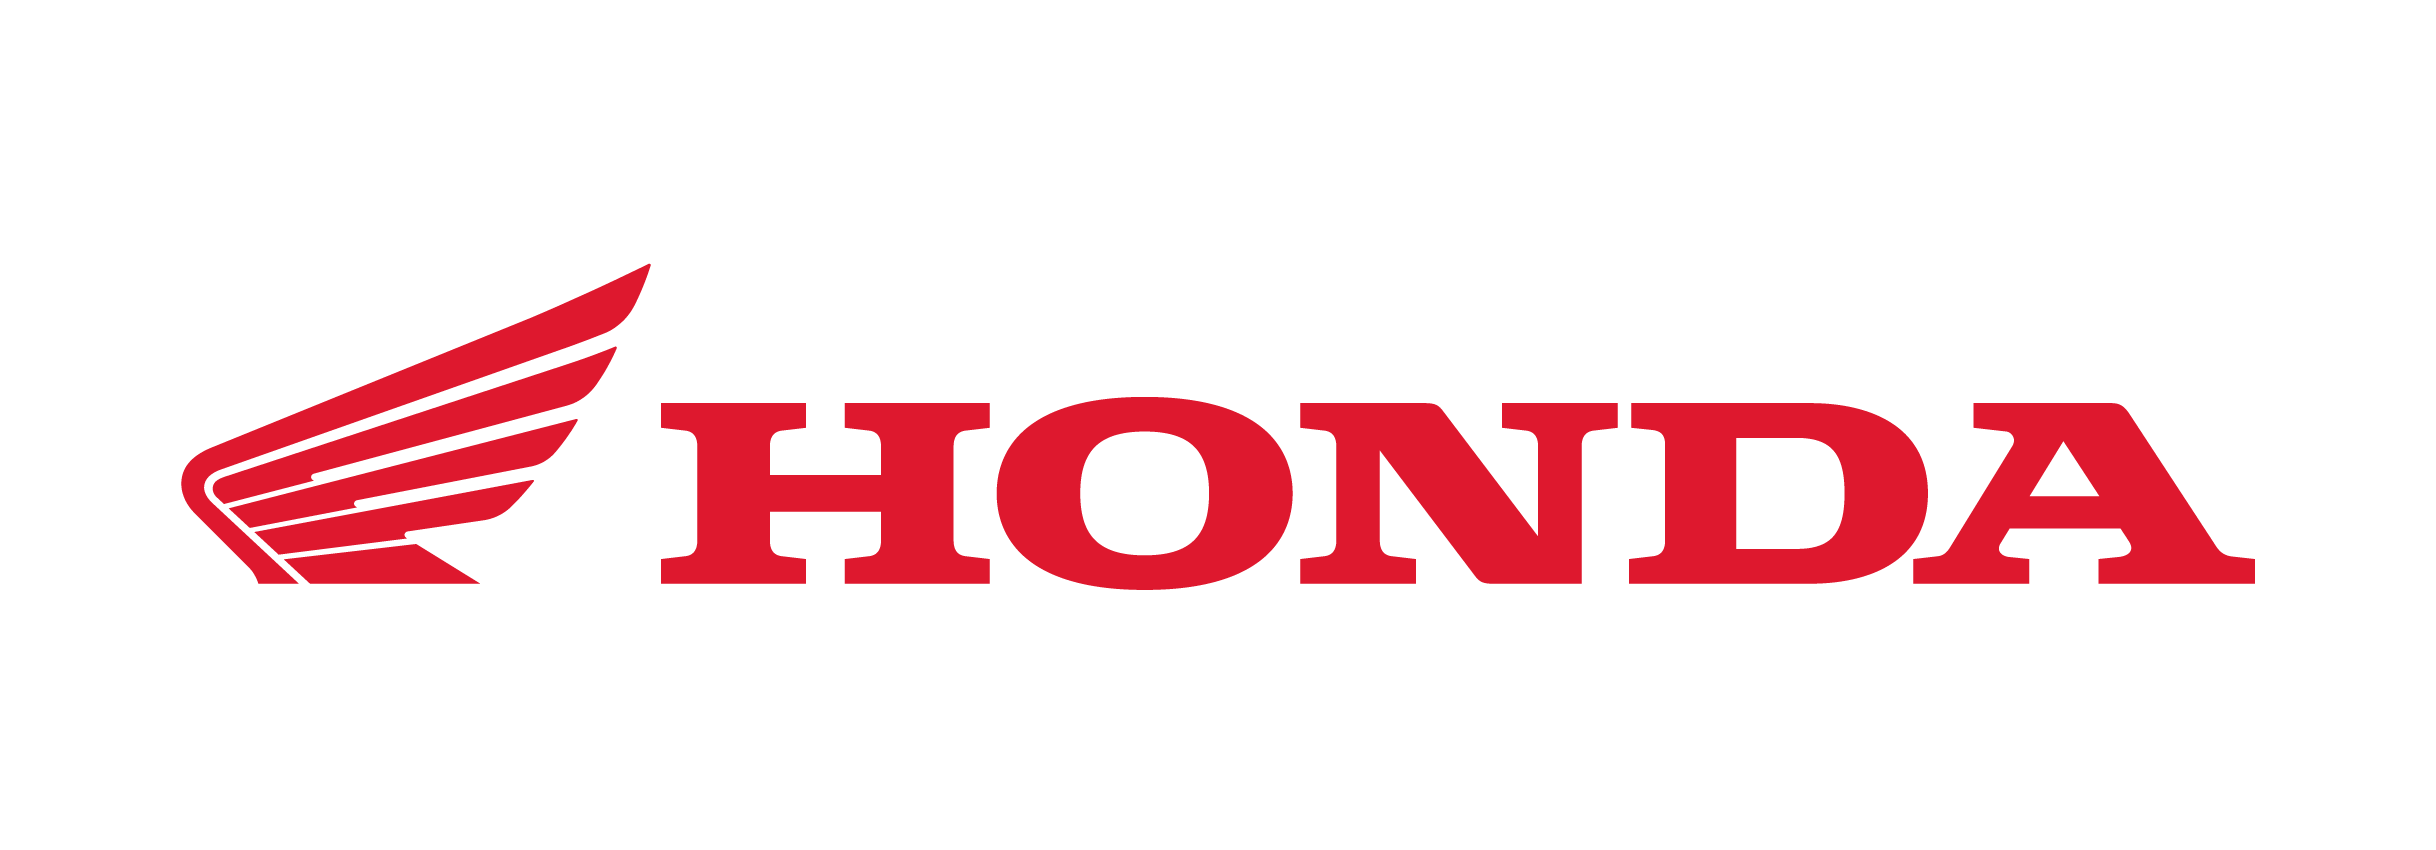 honda logo cartoon pinterest honda logos and motorcycle companies medium